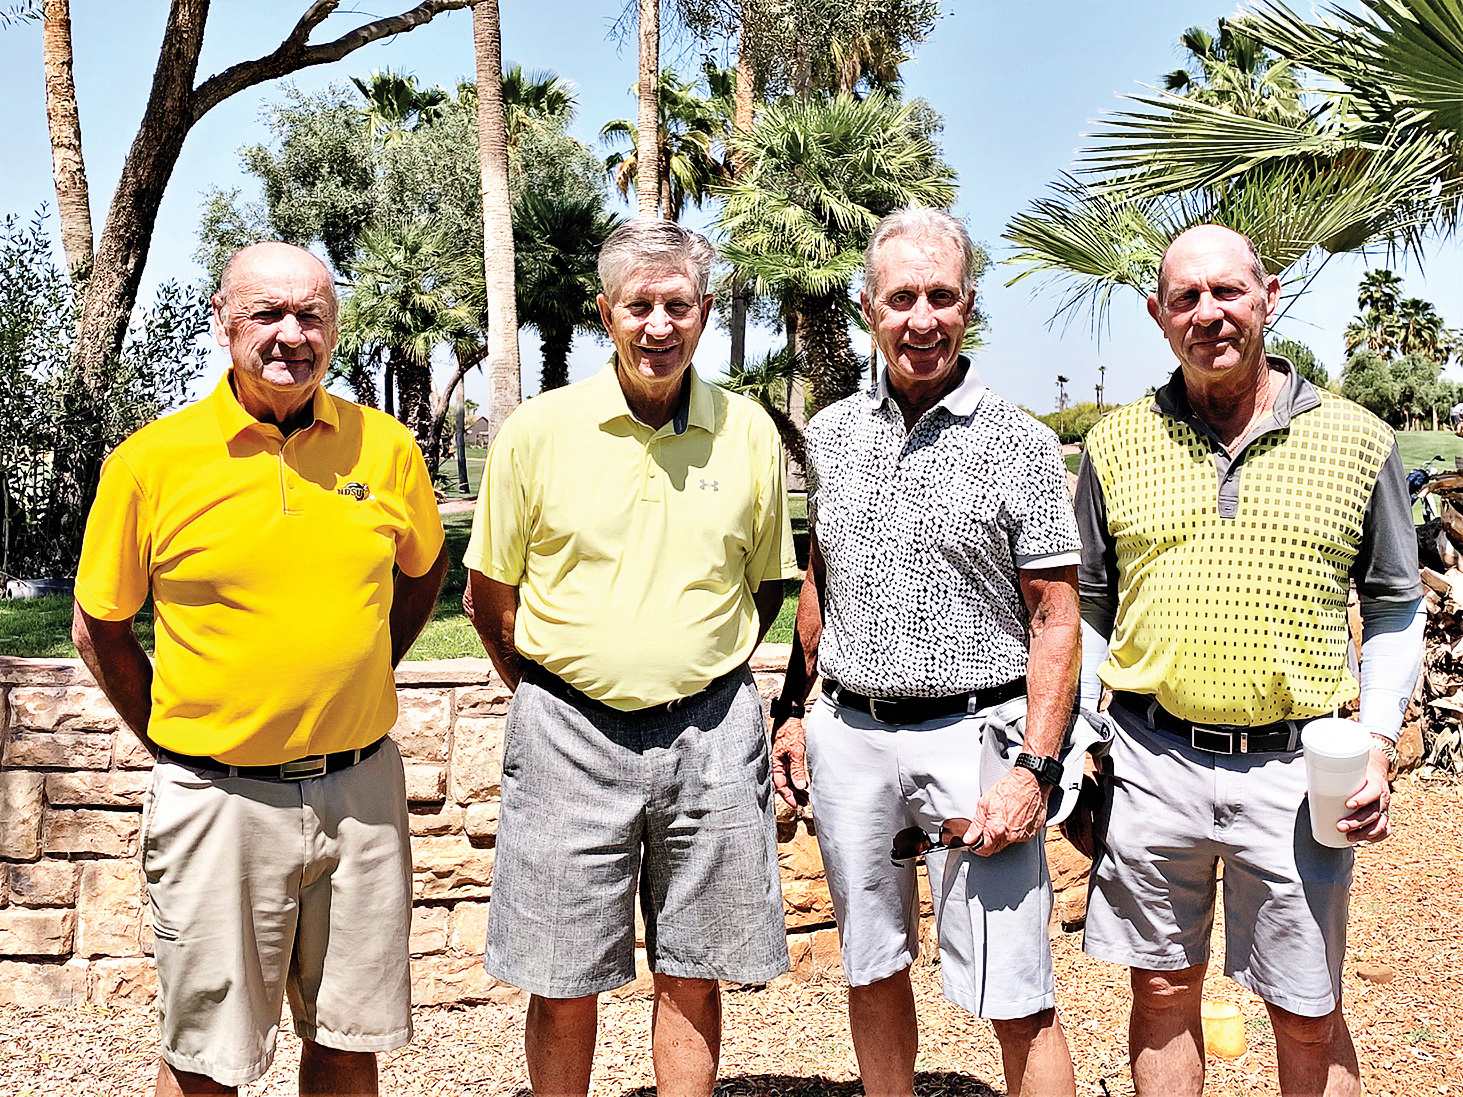 PCMGA officers (left to right): Ken Schumacher, Jack Stipp, Roger Douglas, and John Abercrombie